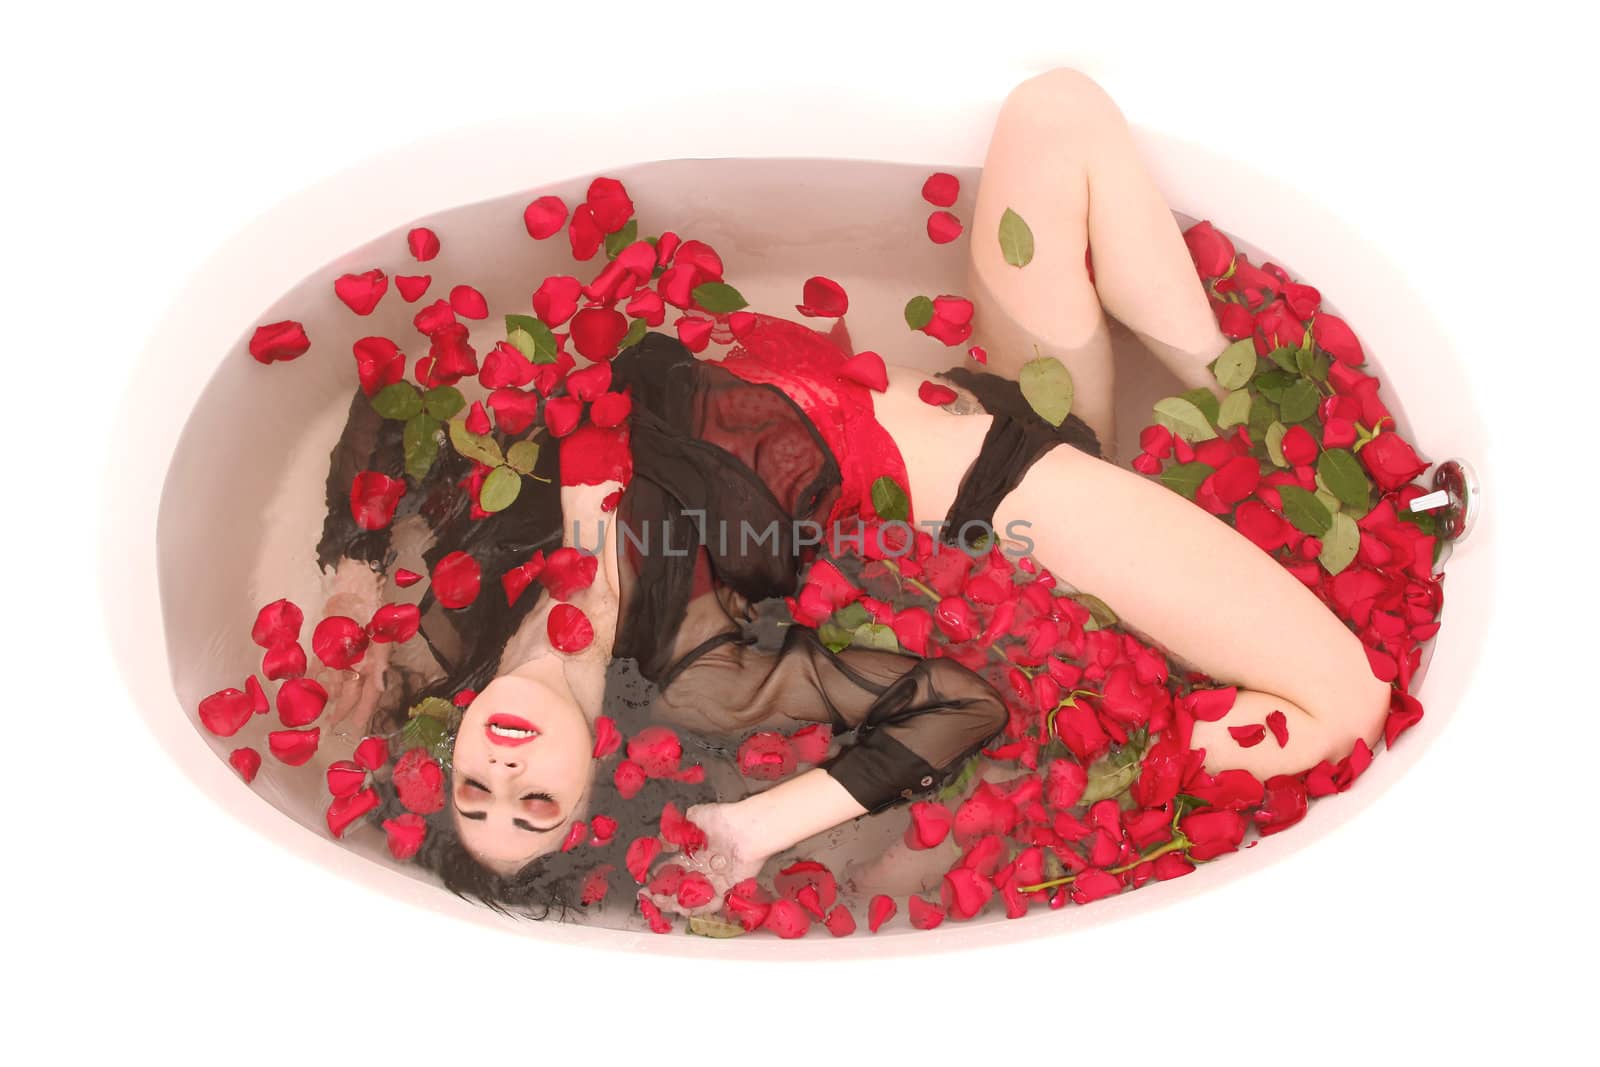 Beautiful Woman in a Bath Tub Full of Flowers